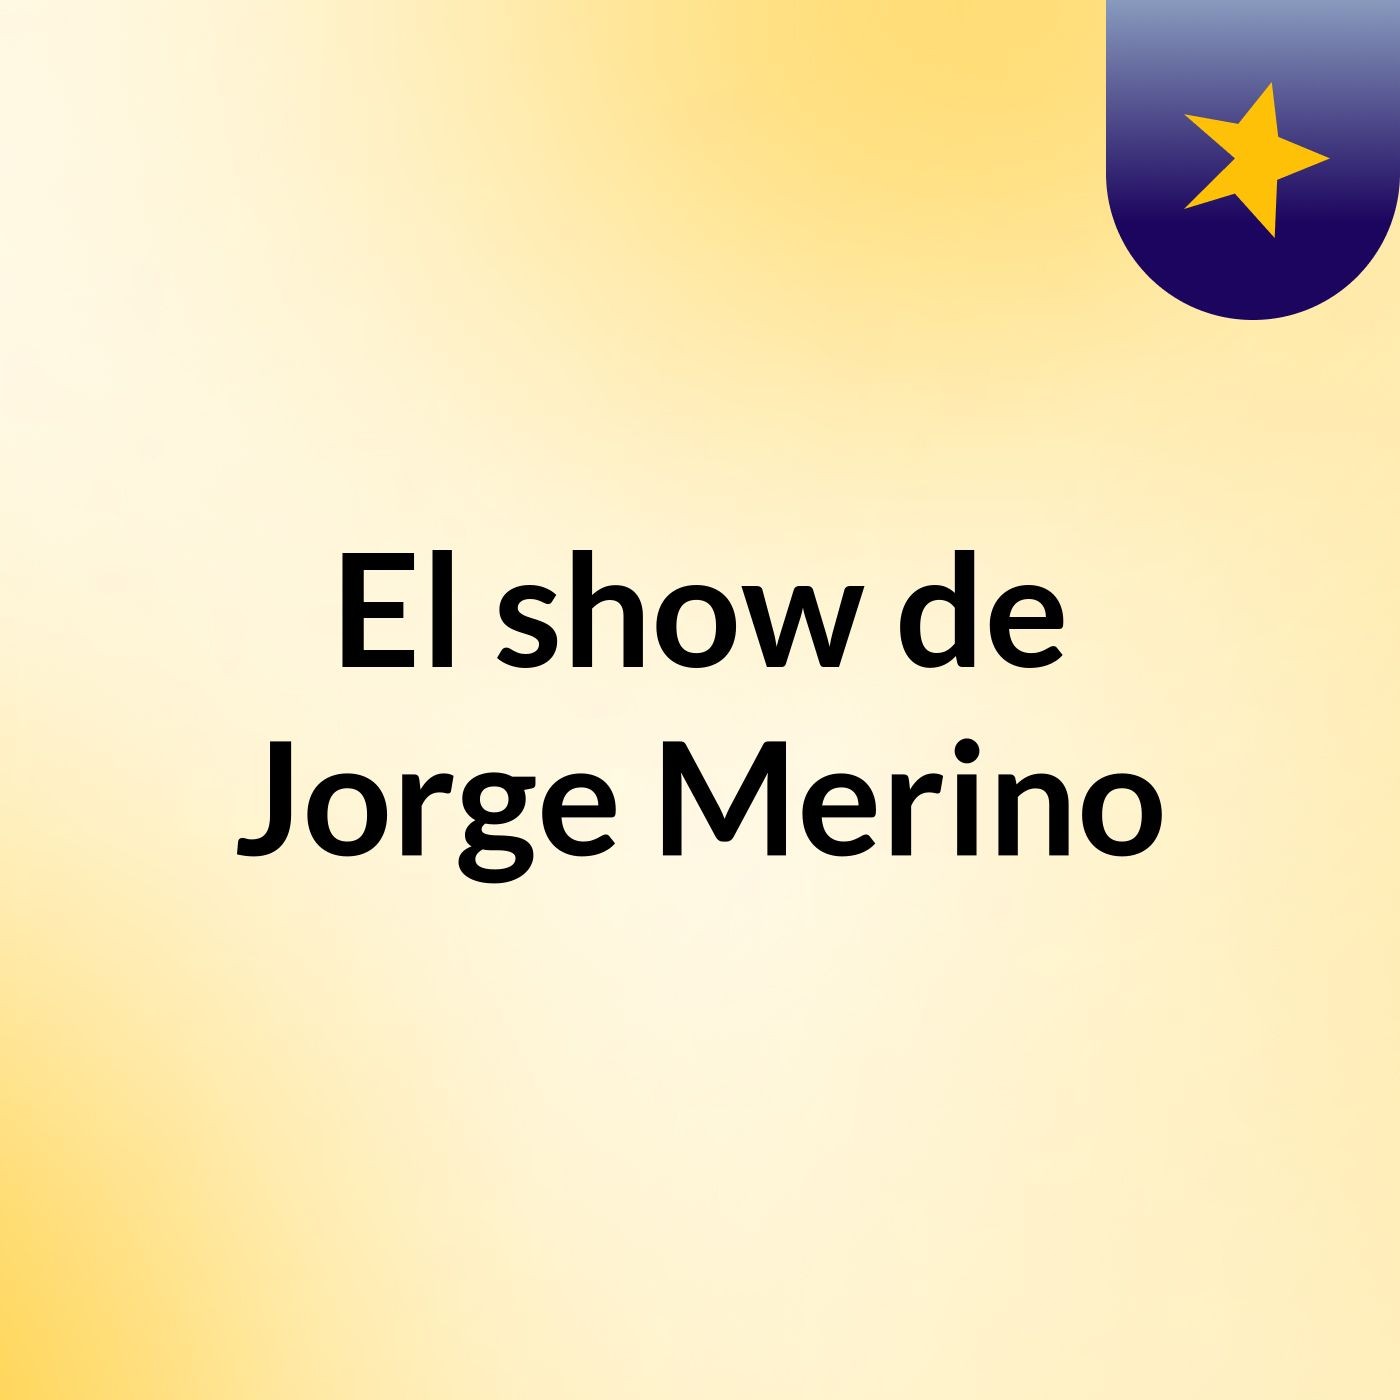 El show de Jorge Merino